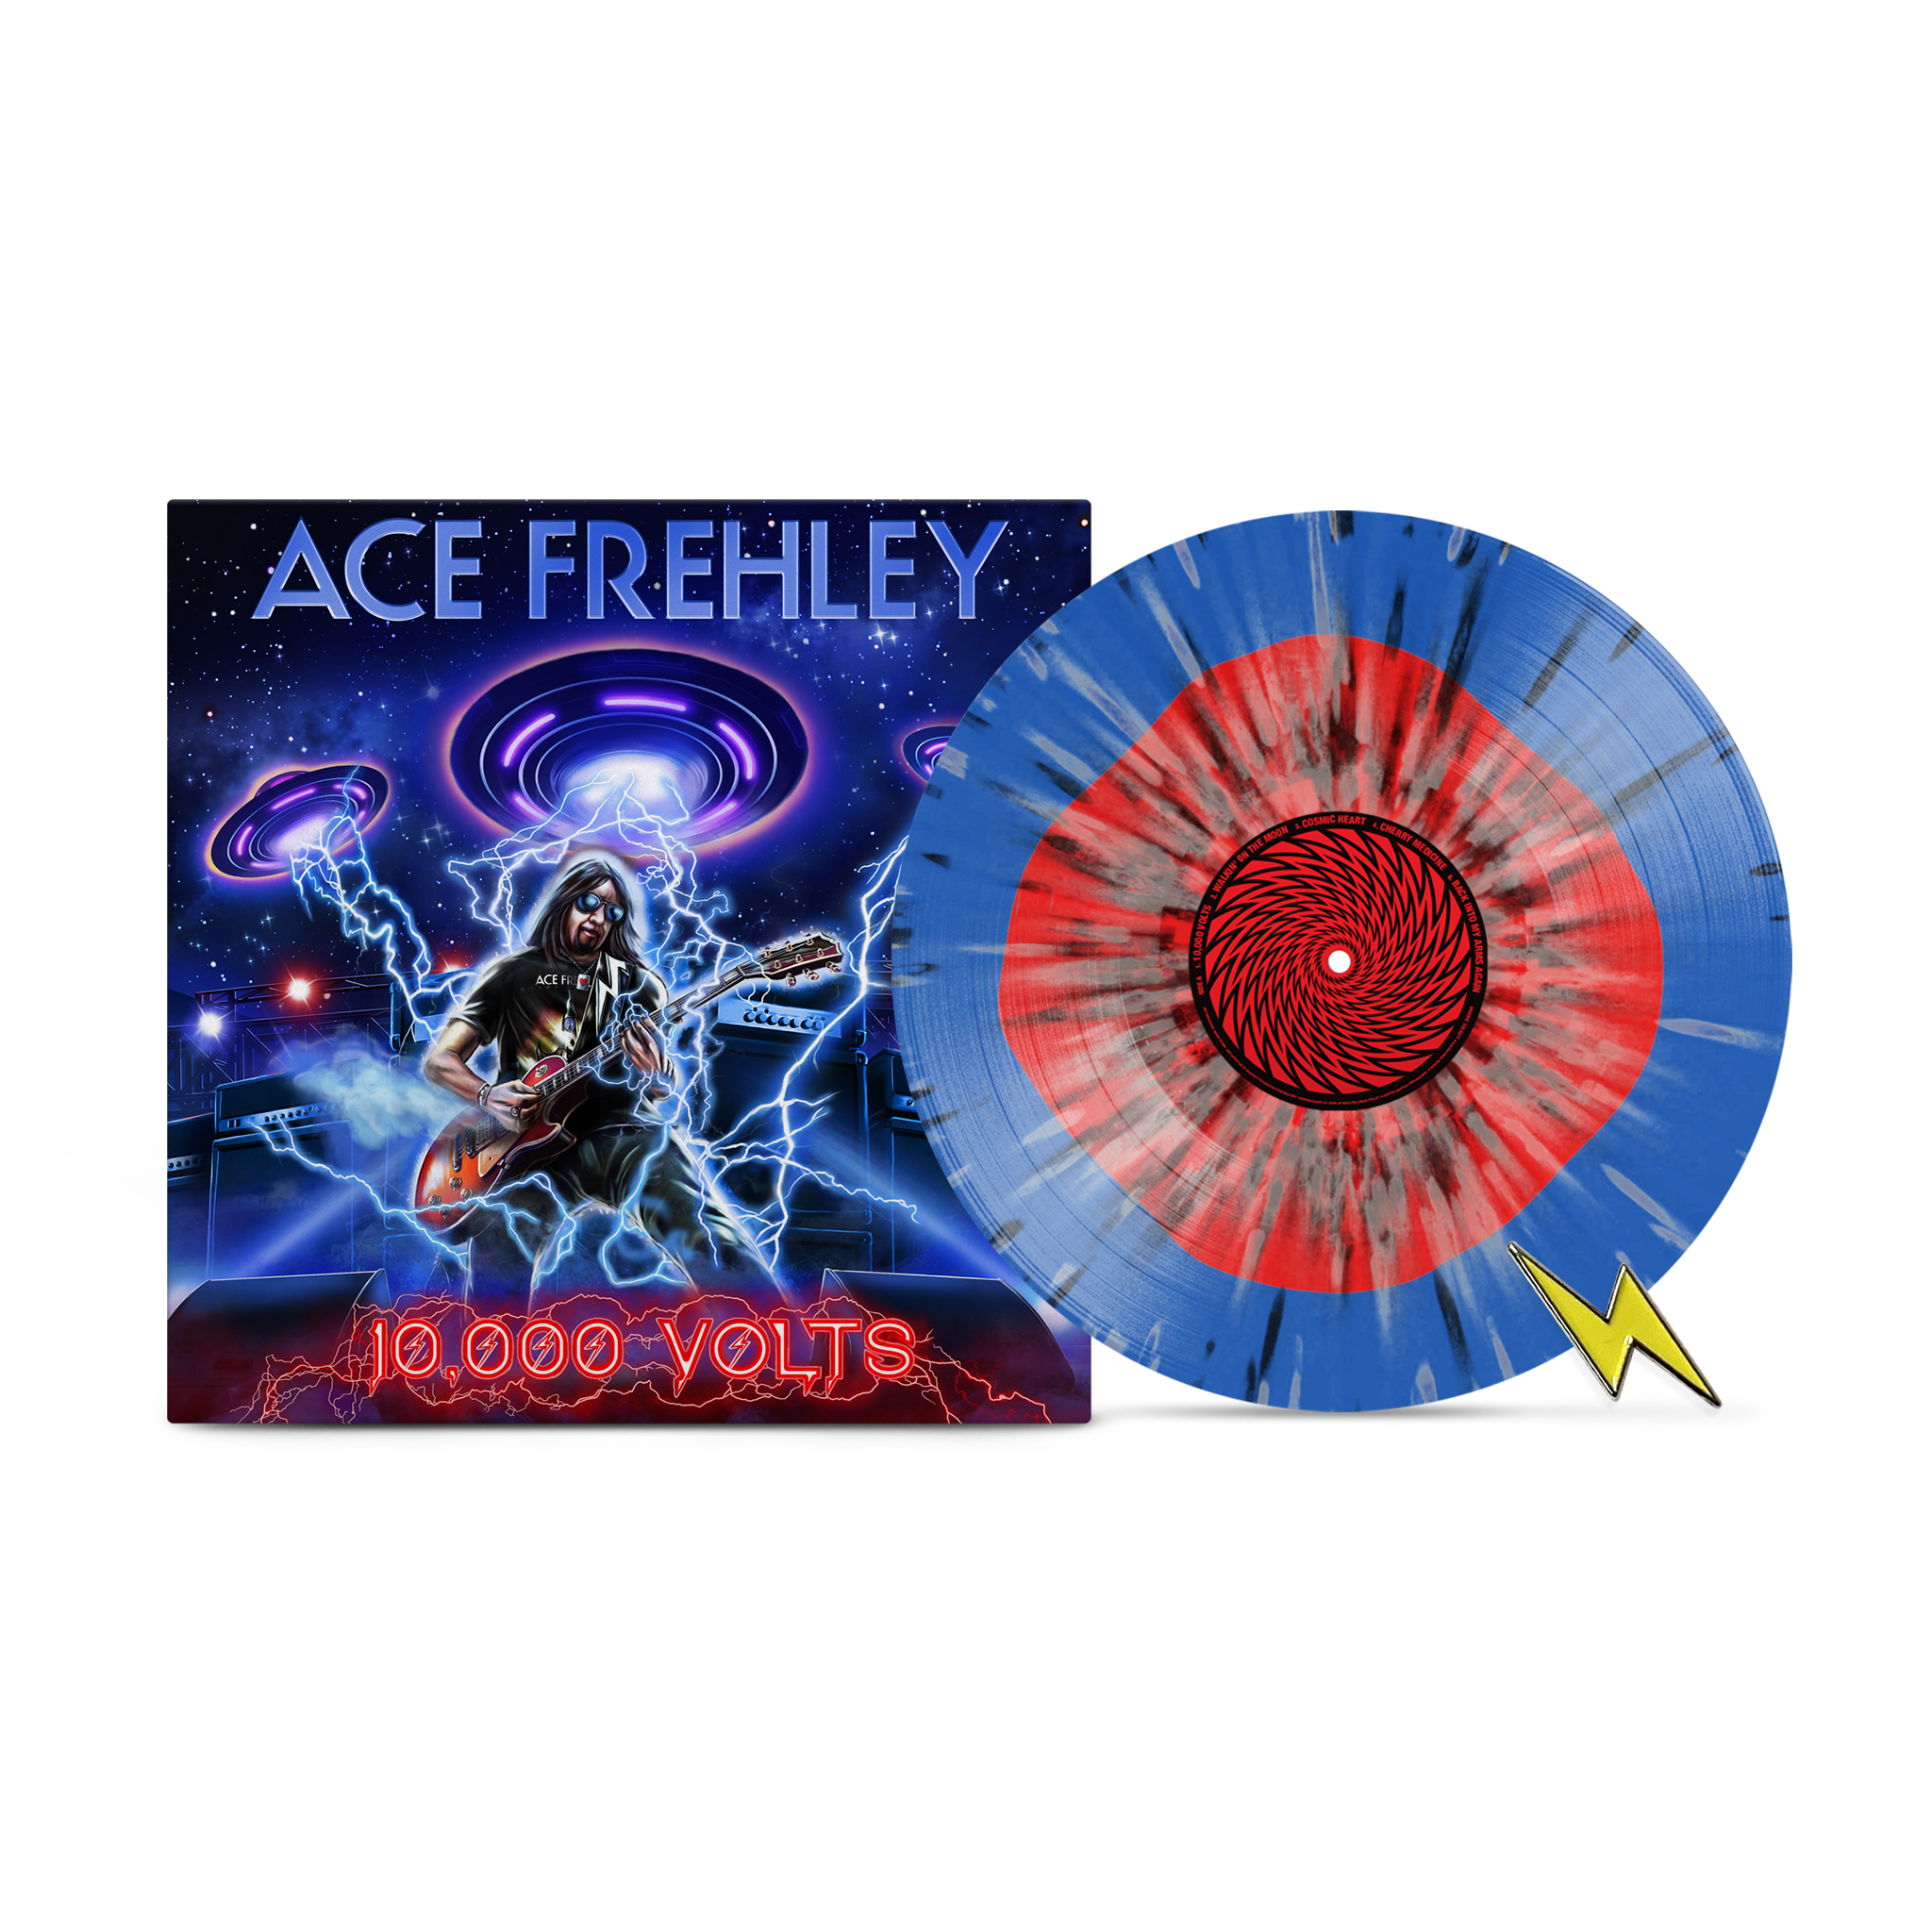 Ace Frehley - 10,000 Volts Color In Color Splatter Vinyl